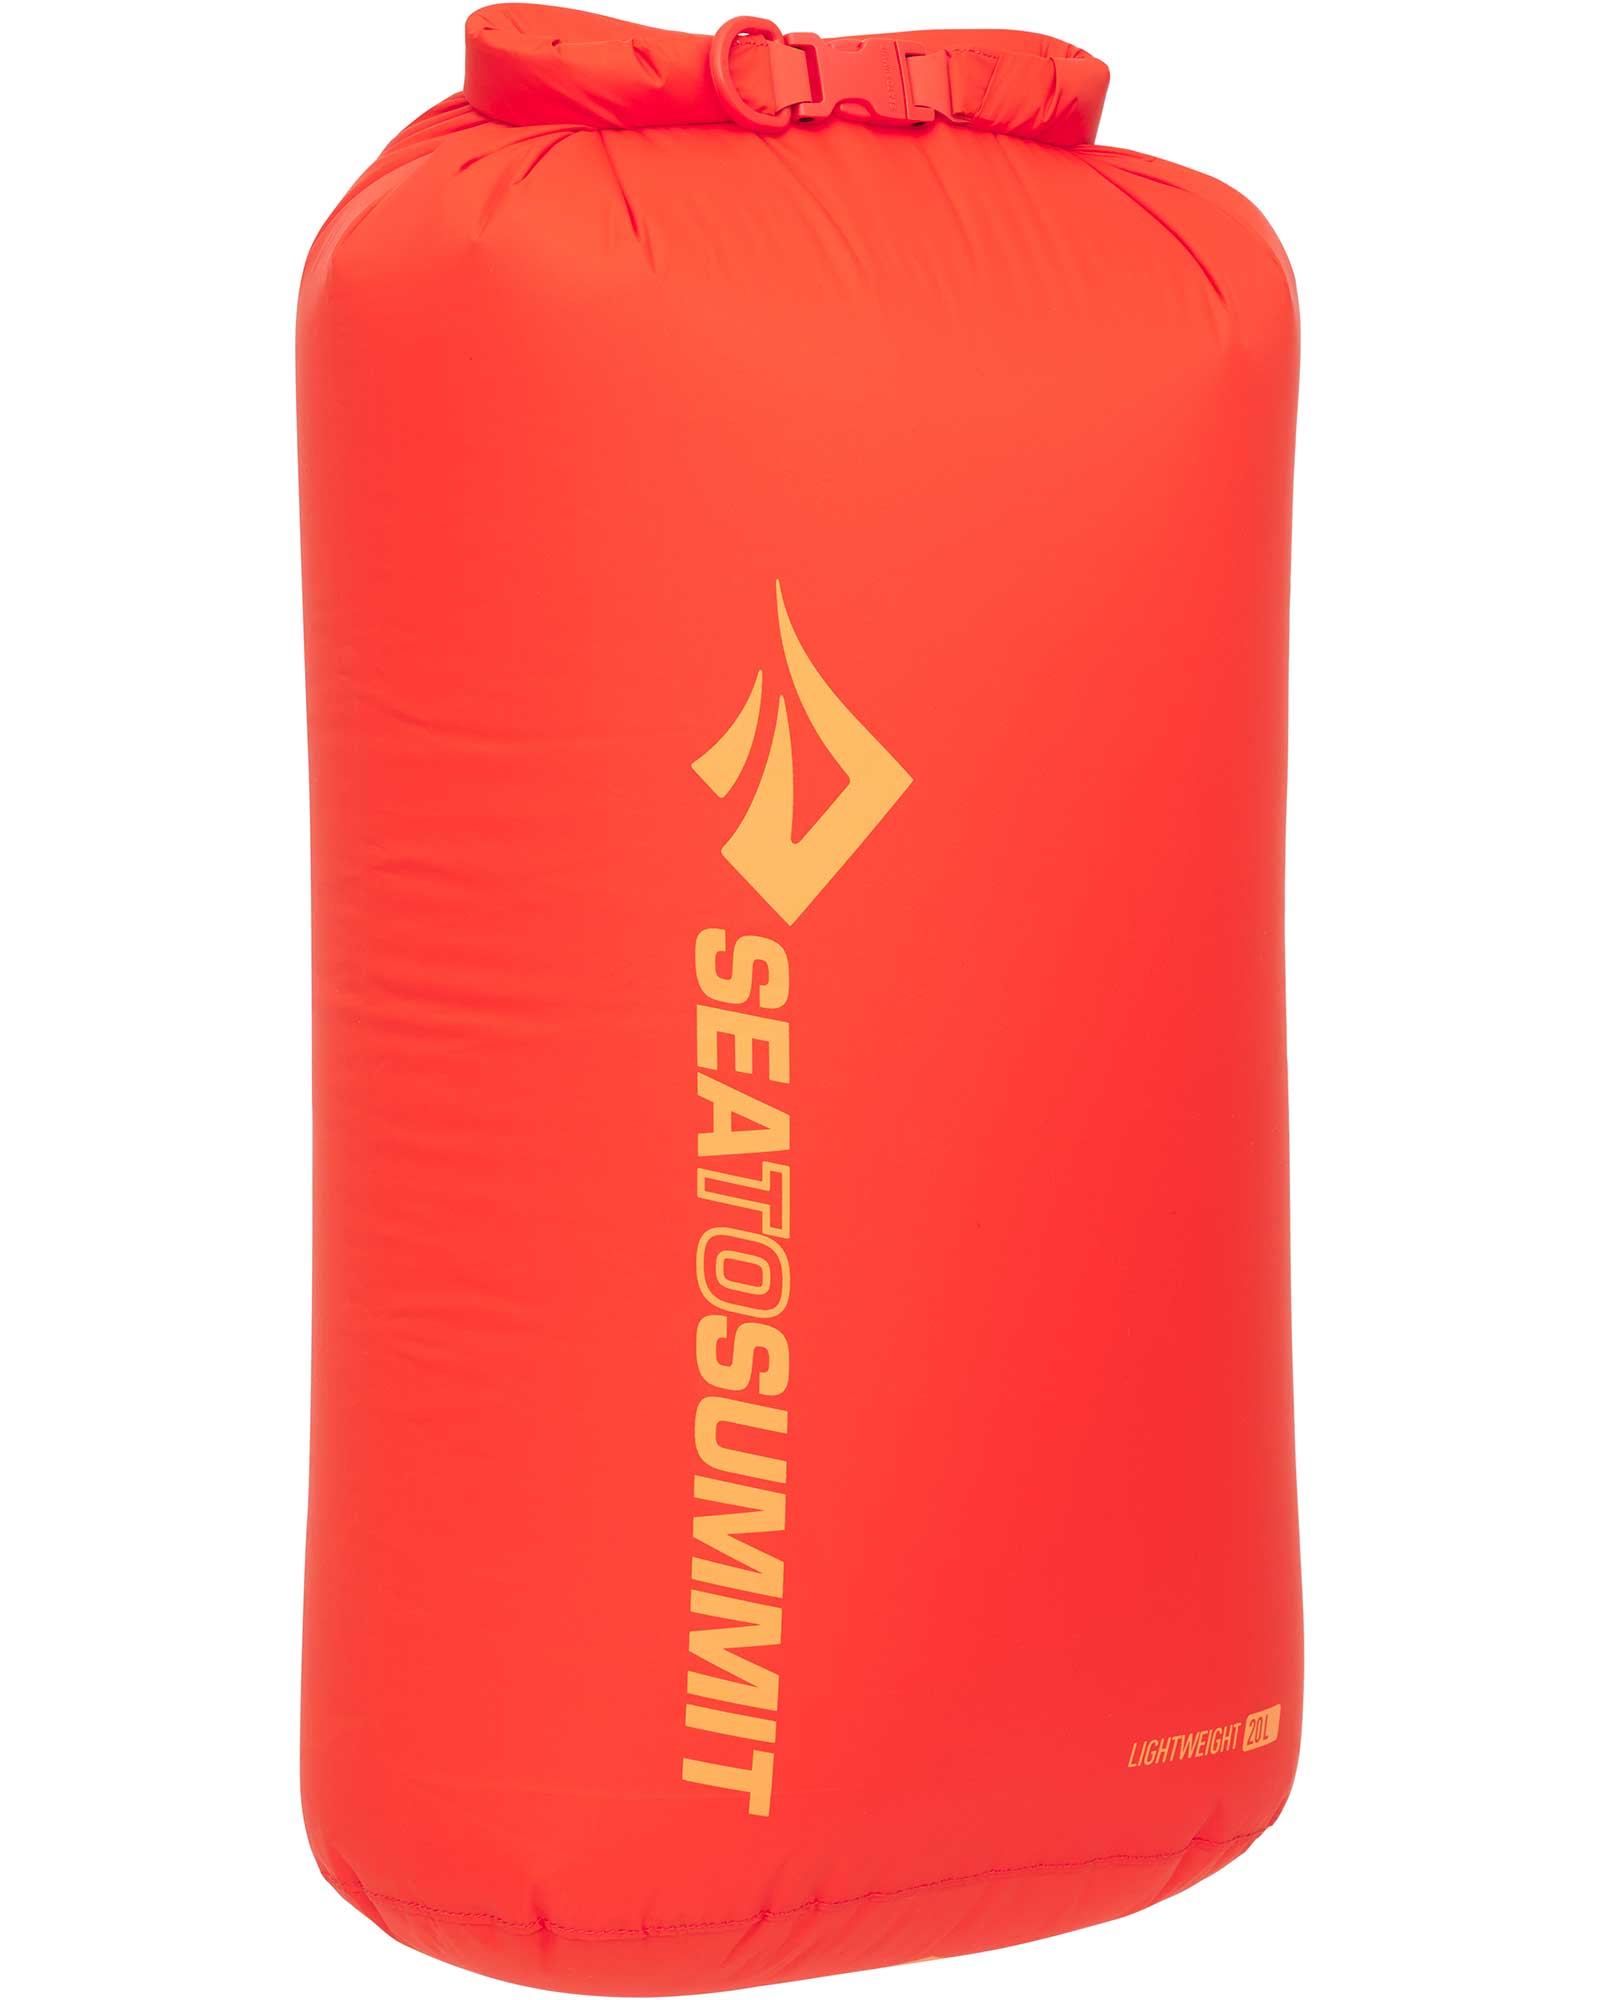 Sea to Summit Lightweight 20L Dry Bag - Spicy Orange